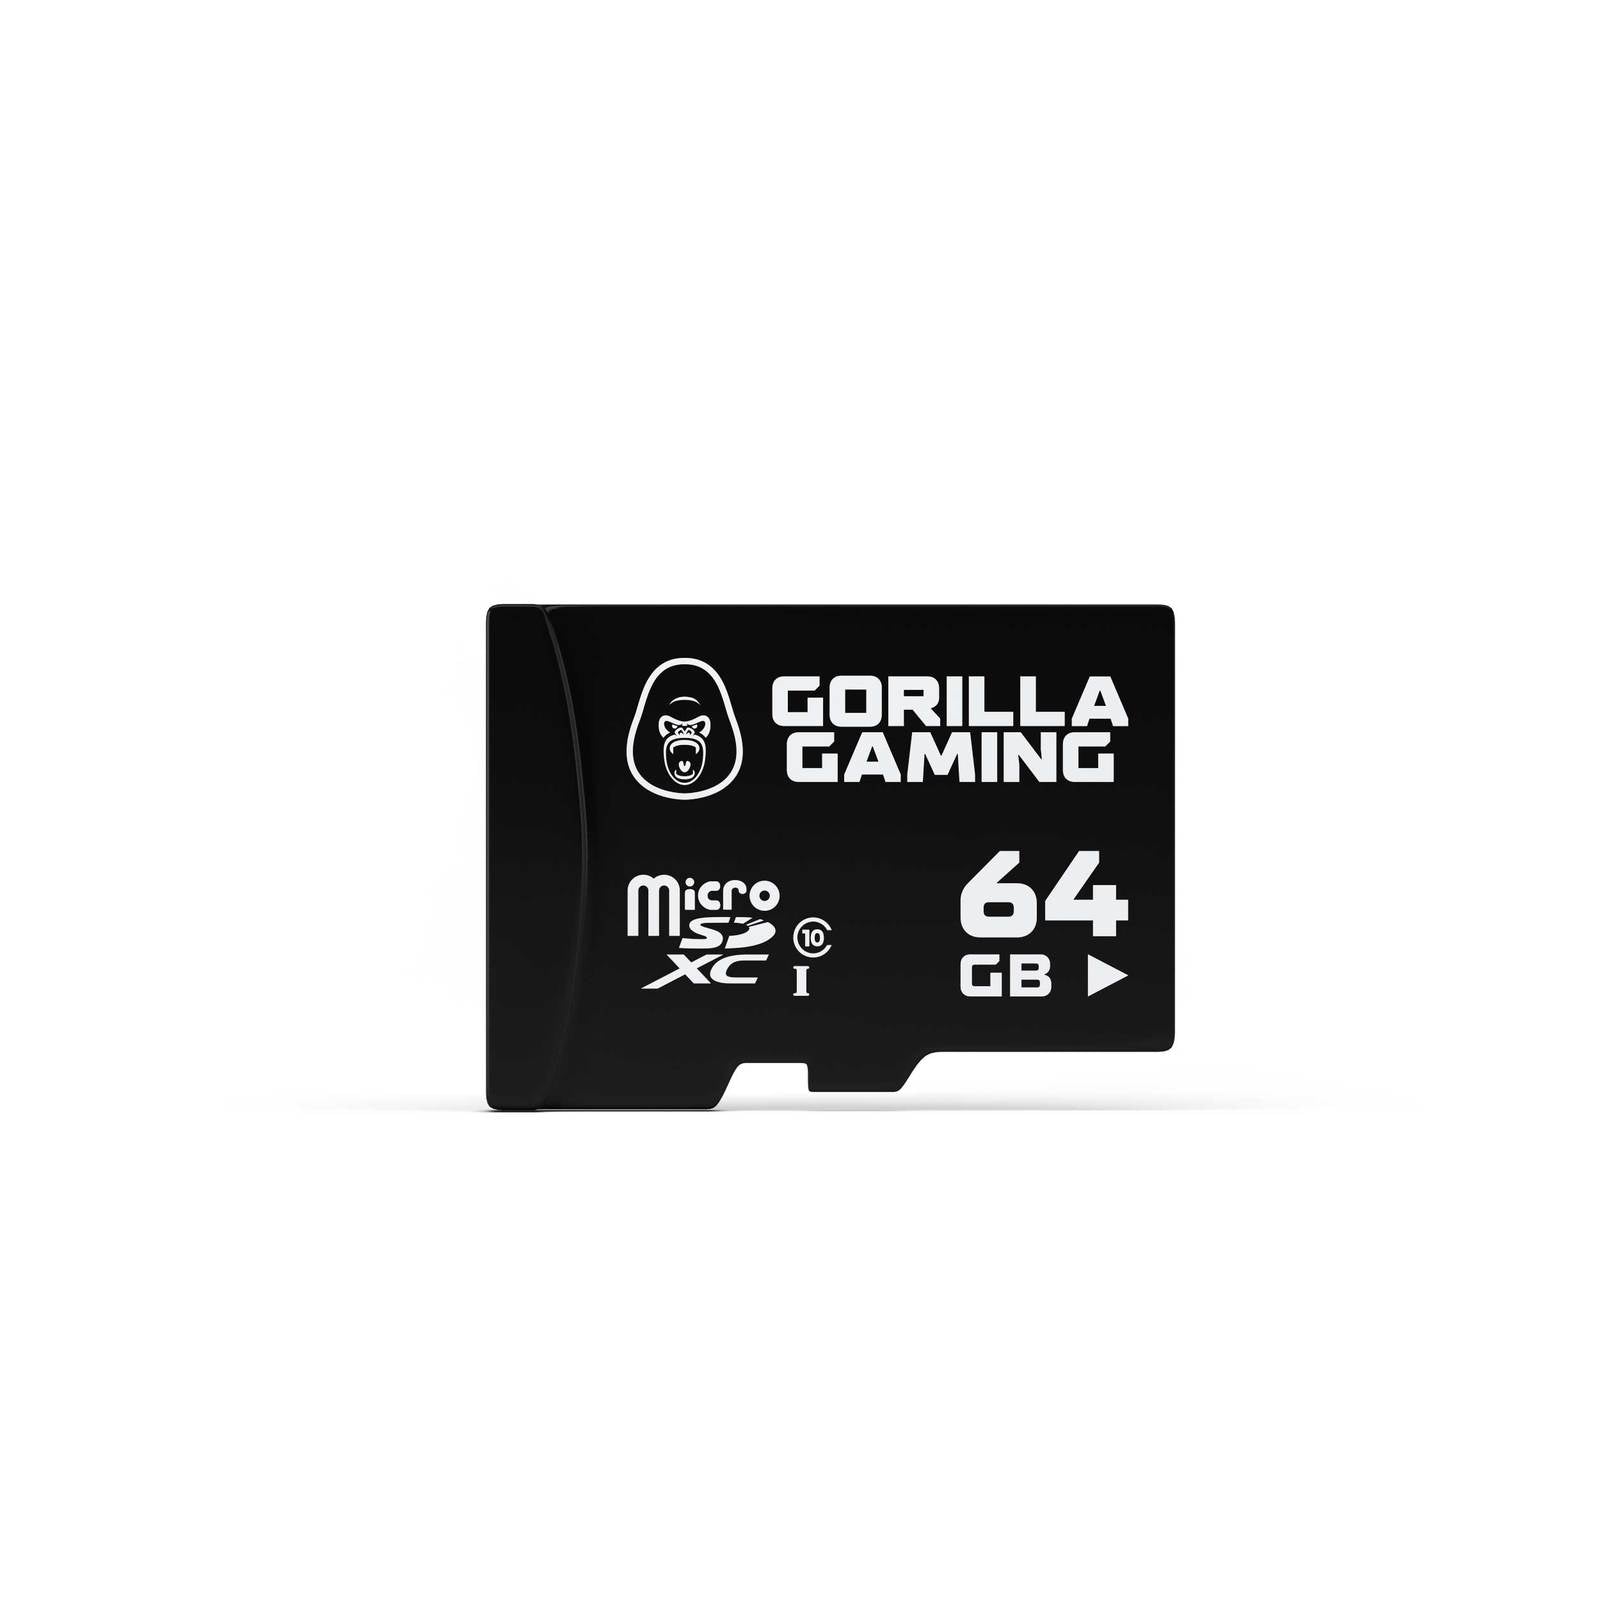 Gorilla Gaming Switch 64GB Memory Card - Nintendo Switch